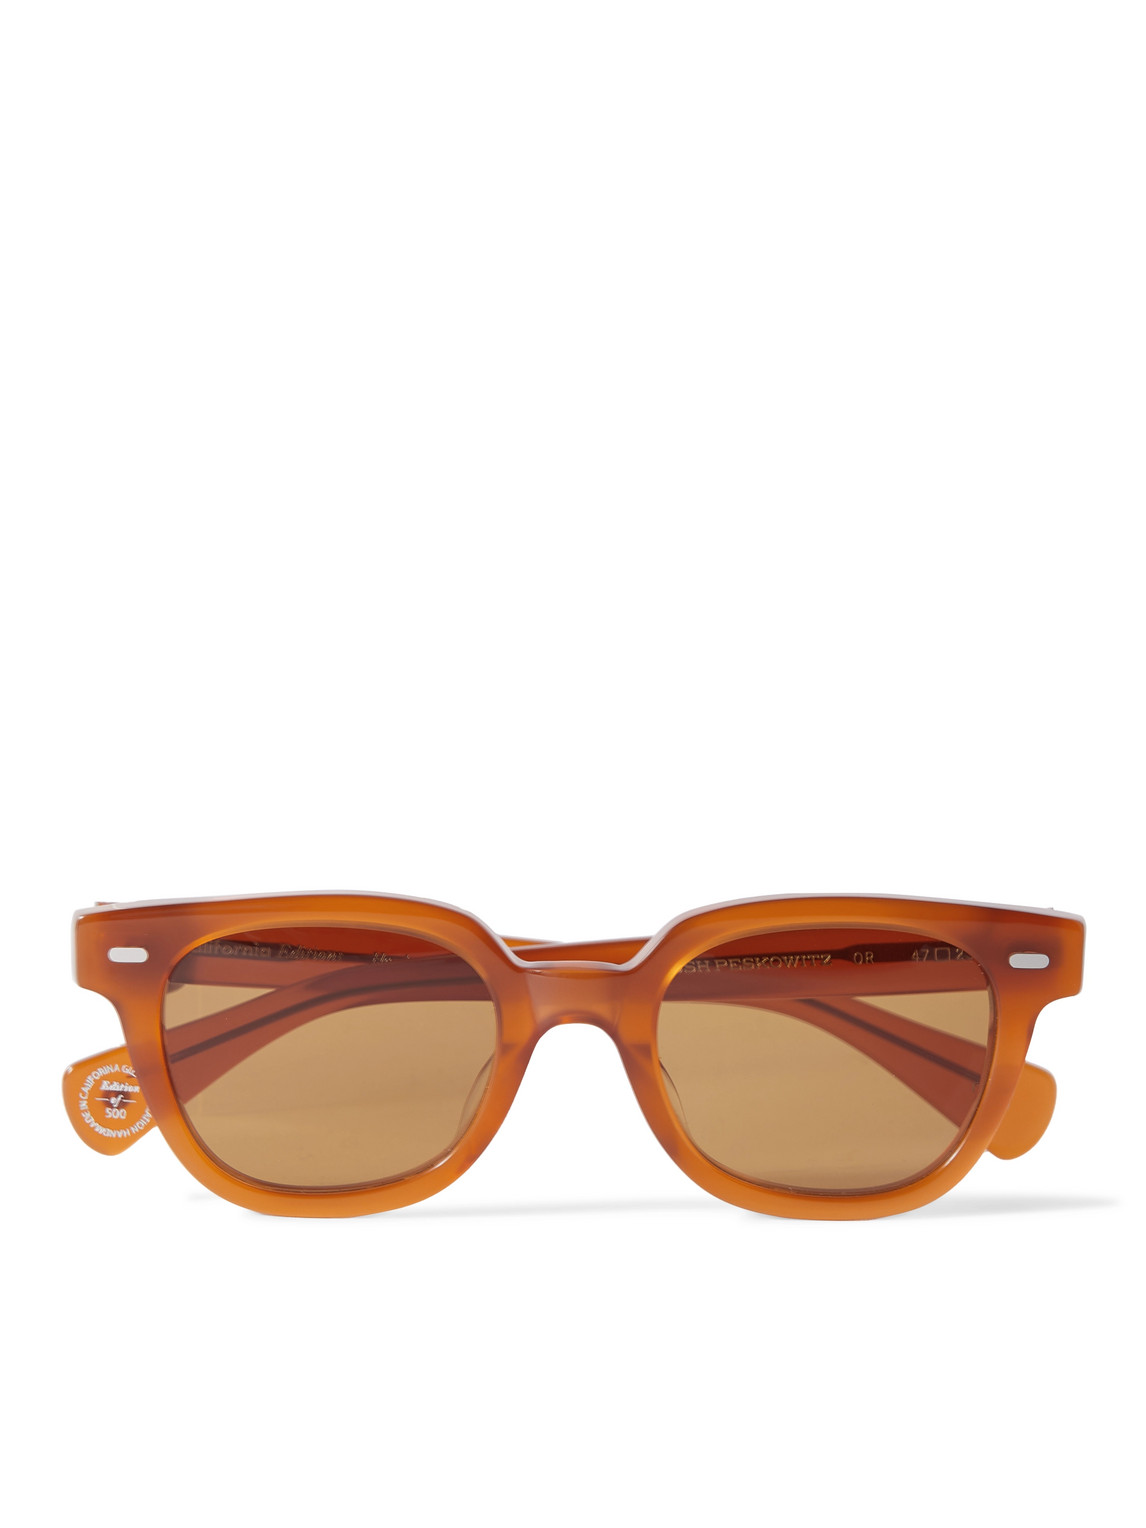 Garrett Leight California Optical Glco Josh Peskowitz D-frame Acetate Sunglasses In Orange